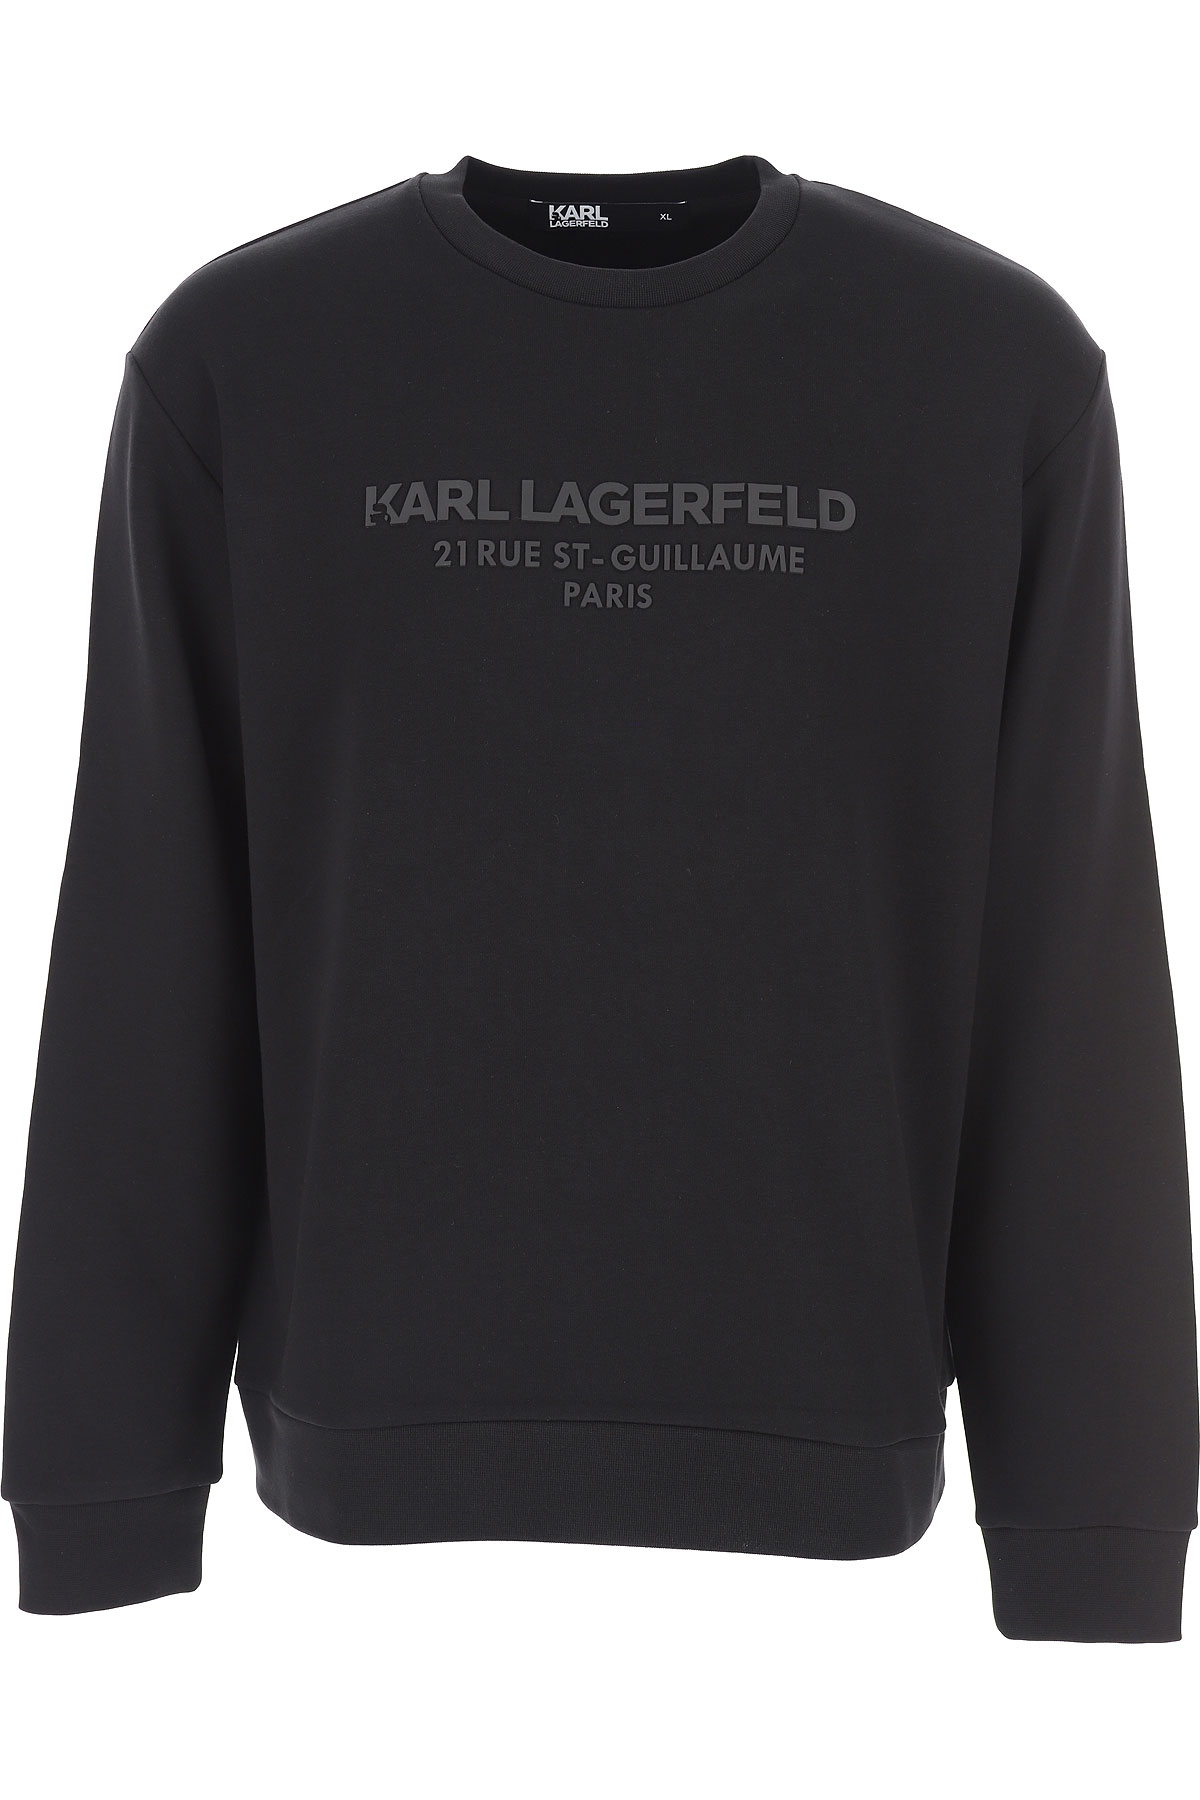 Karl Lagerfeld Abbigliamento Uomo